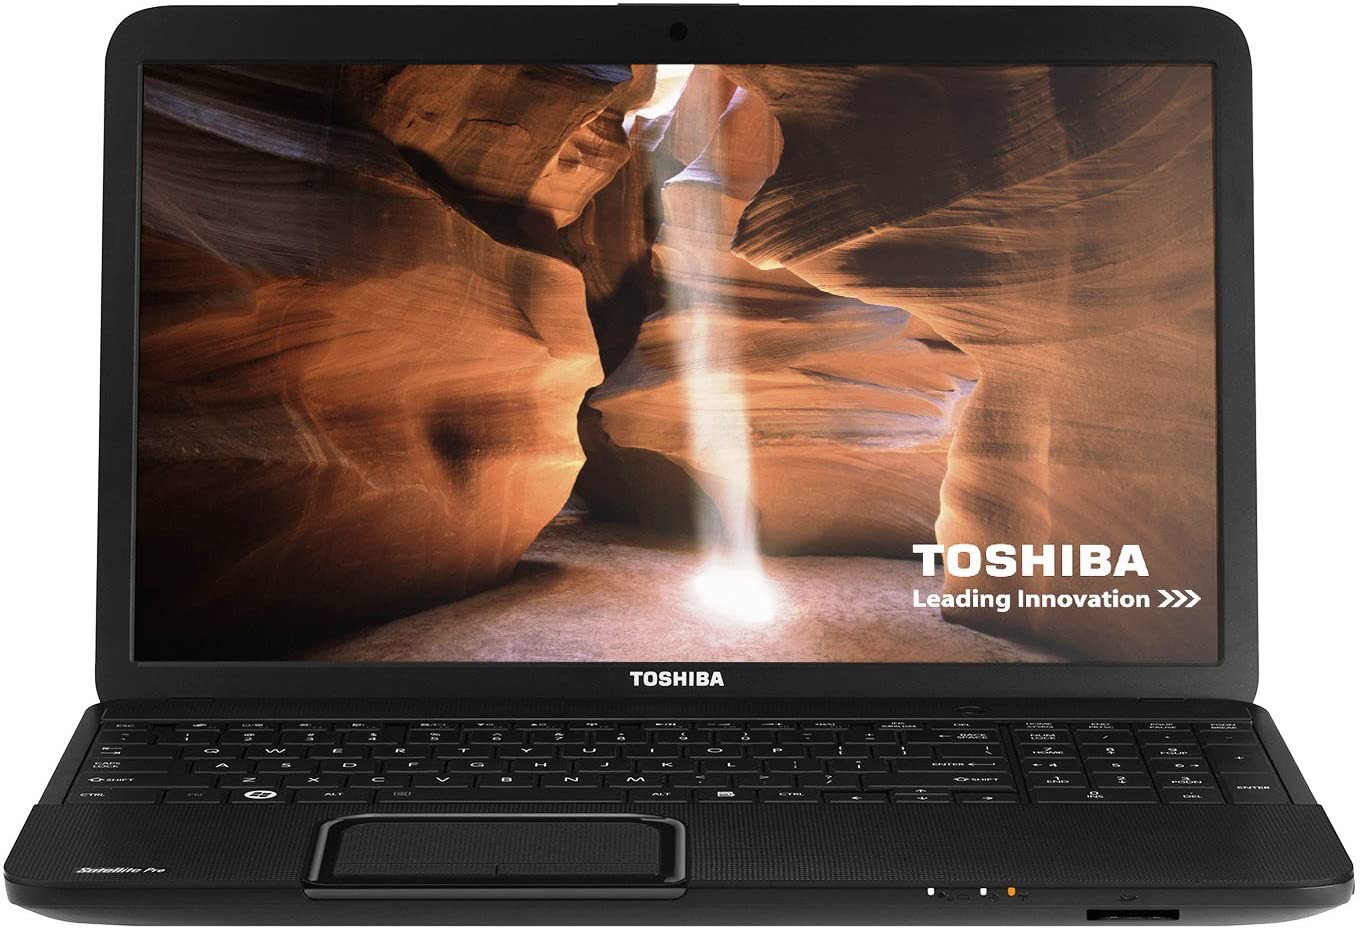 Toshiba Satellite Pro c850-1he 1.80ghz 4gb 500gb Hdmi Webcam w10 Pro Laptop